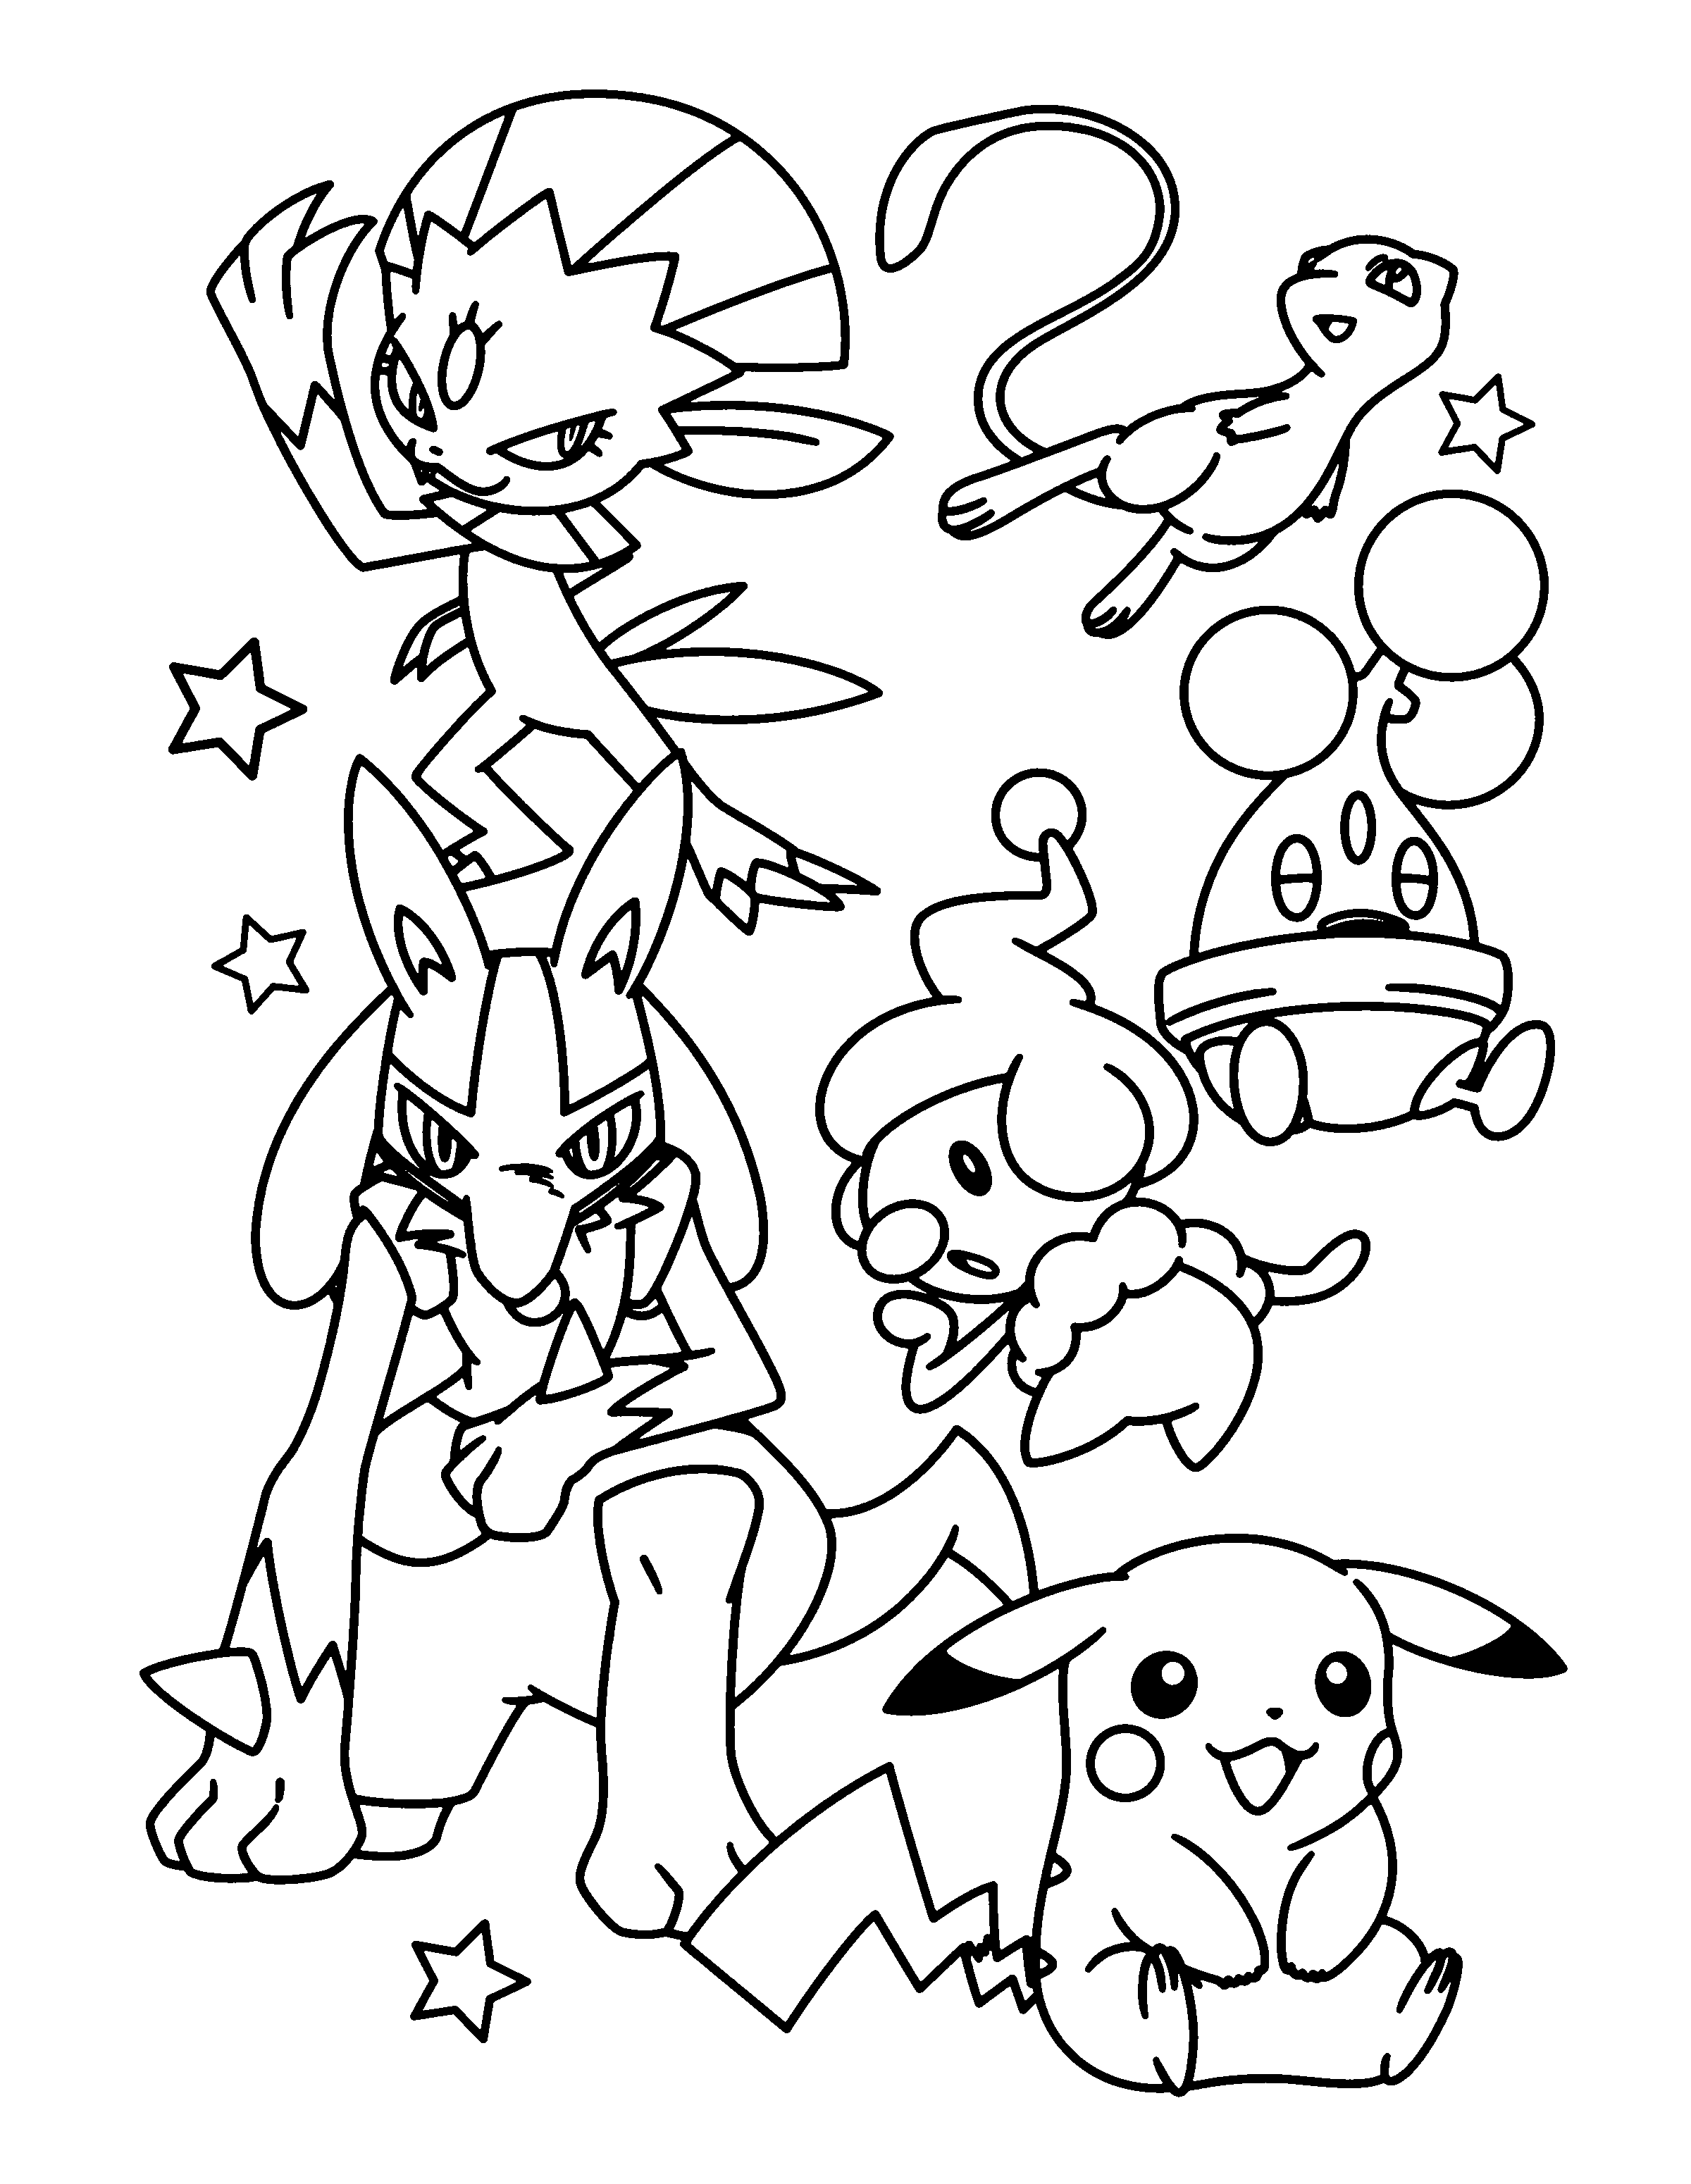 cute-pokemon-emolga-coloring-pages-2-free-coloring-sheets-2021